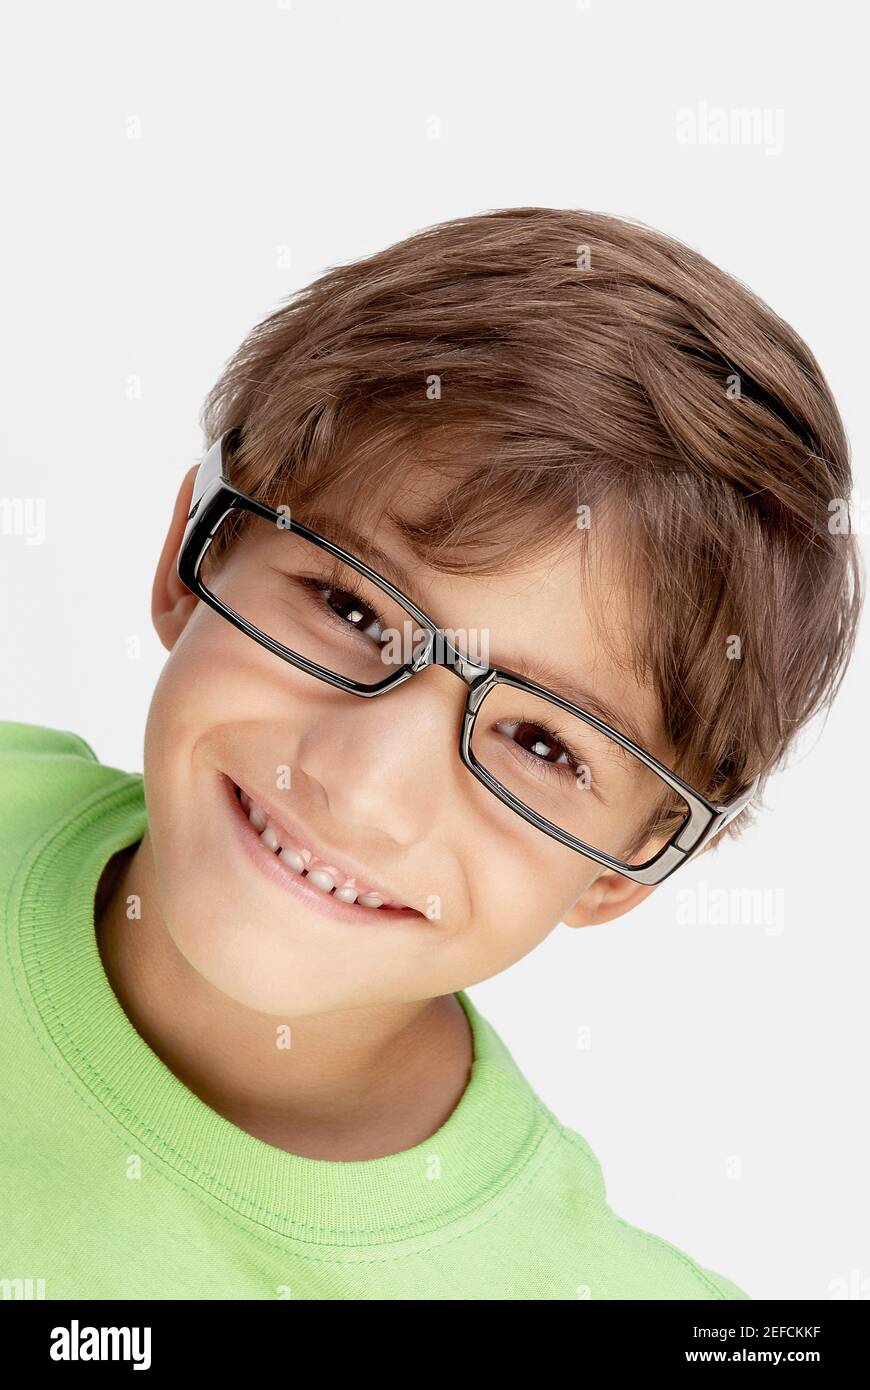 Portrait of a boy smiling wearing eyeglasses Stock Photo